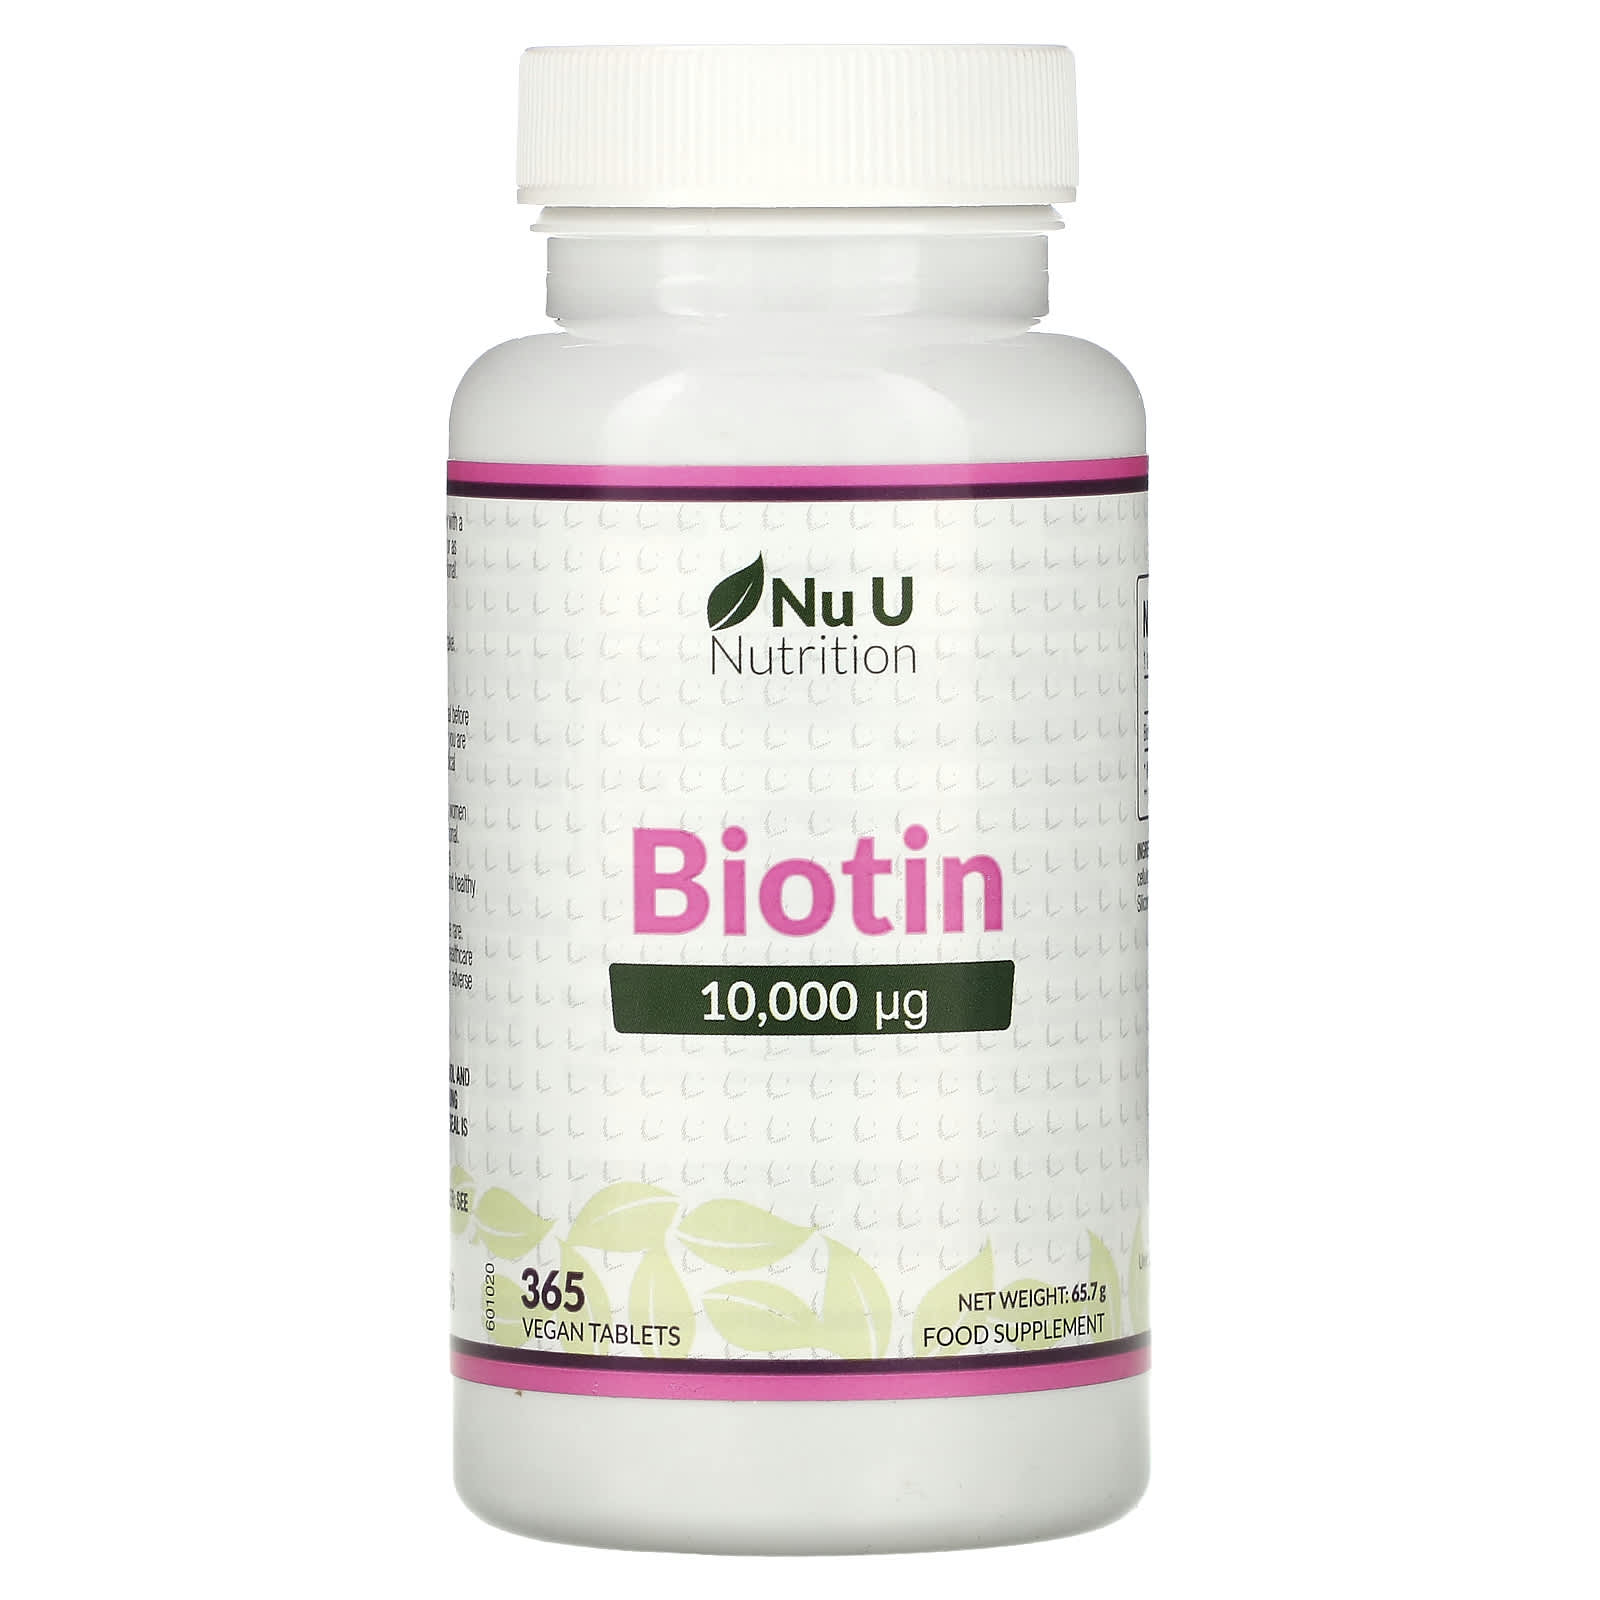 Nu U Nutrition Extra Strength 5000mcg Biotin vs Biotin by Natures Bounty 10057